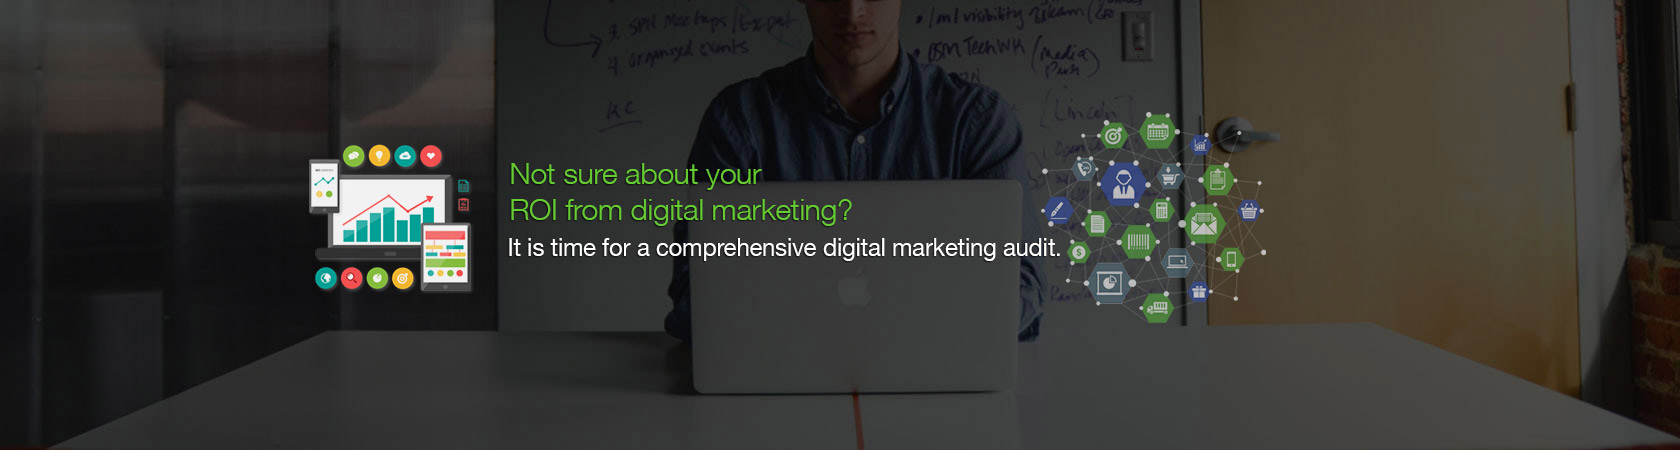 marketBE-Digital-marketing-audit